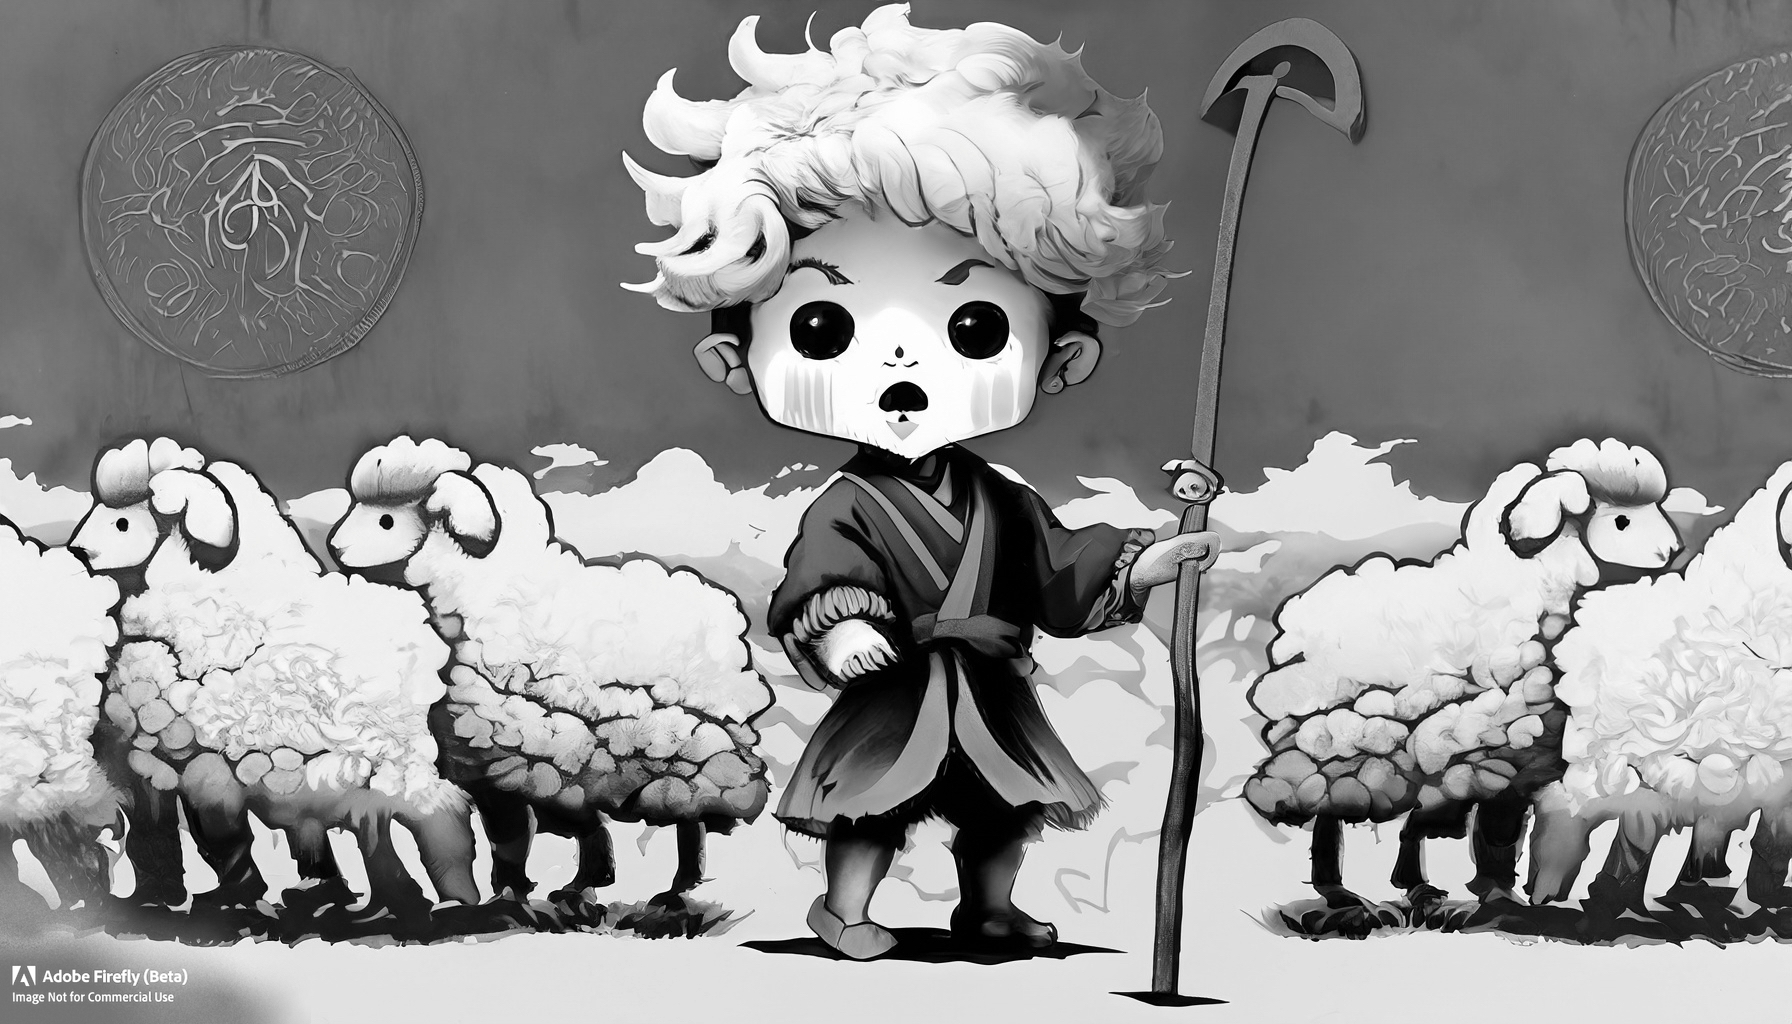 David with Sheep